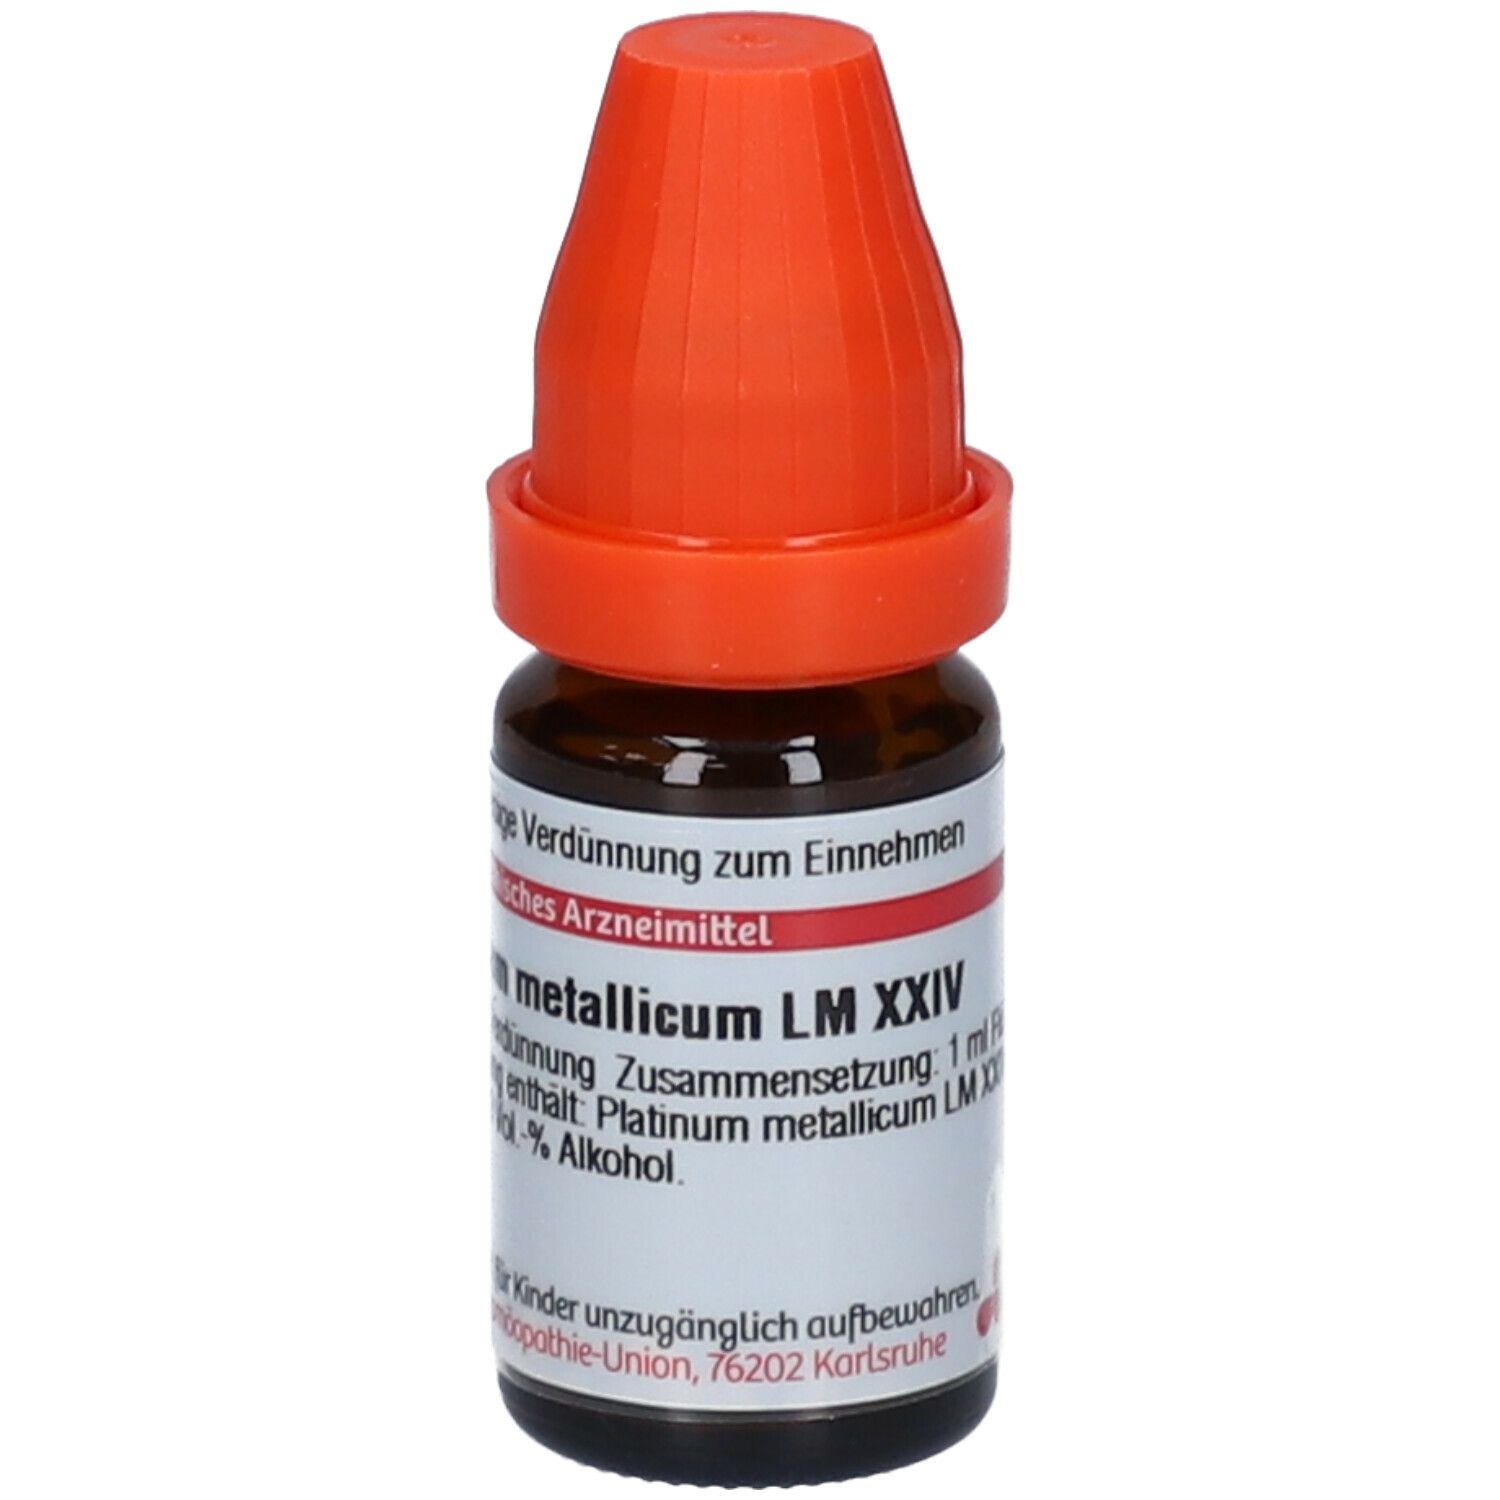 DHU Platinum Metallicum LM XXIV